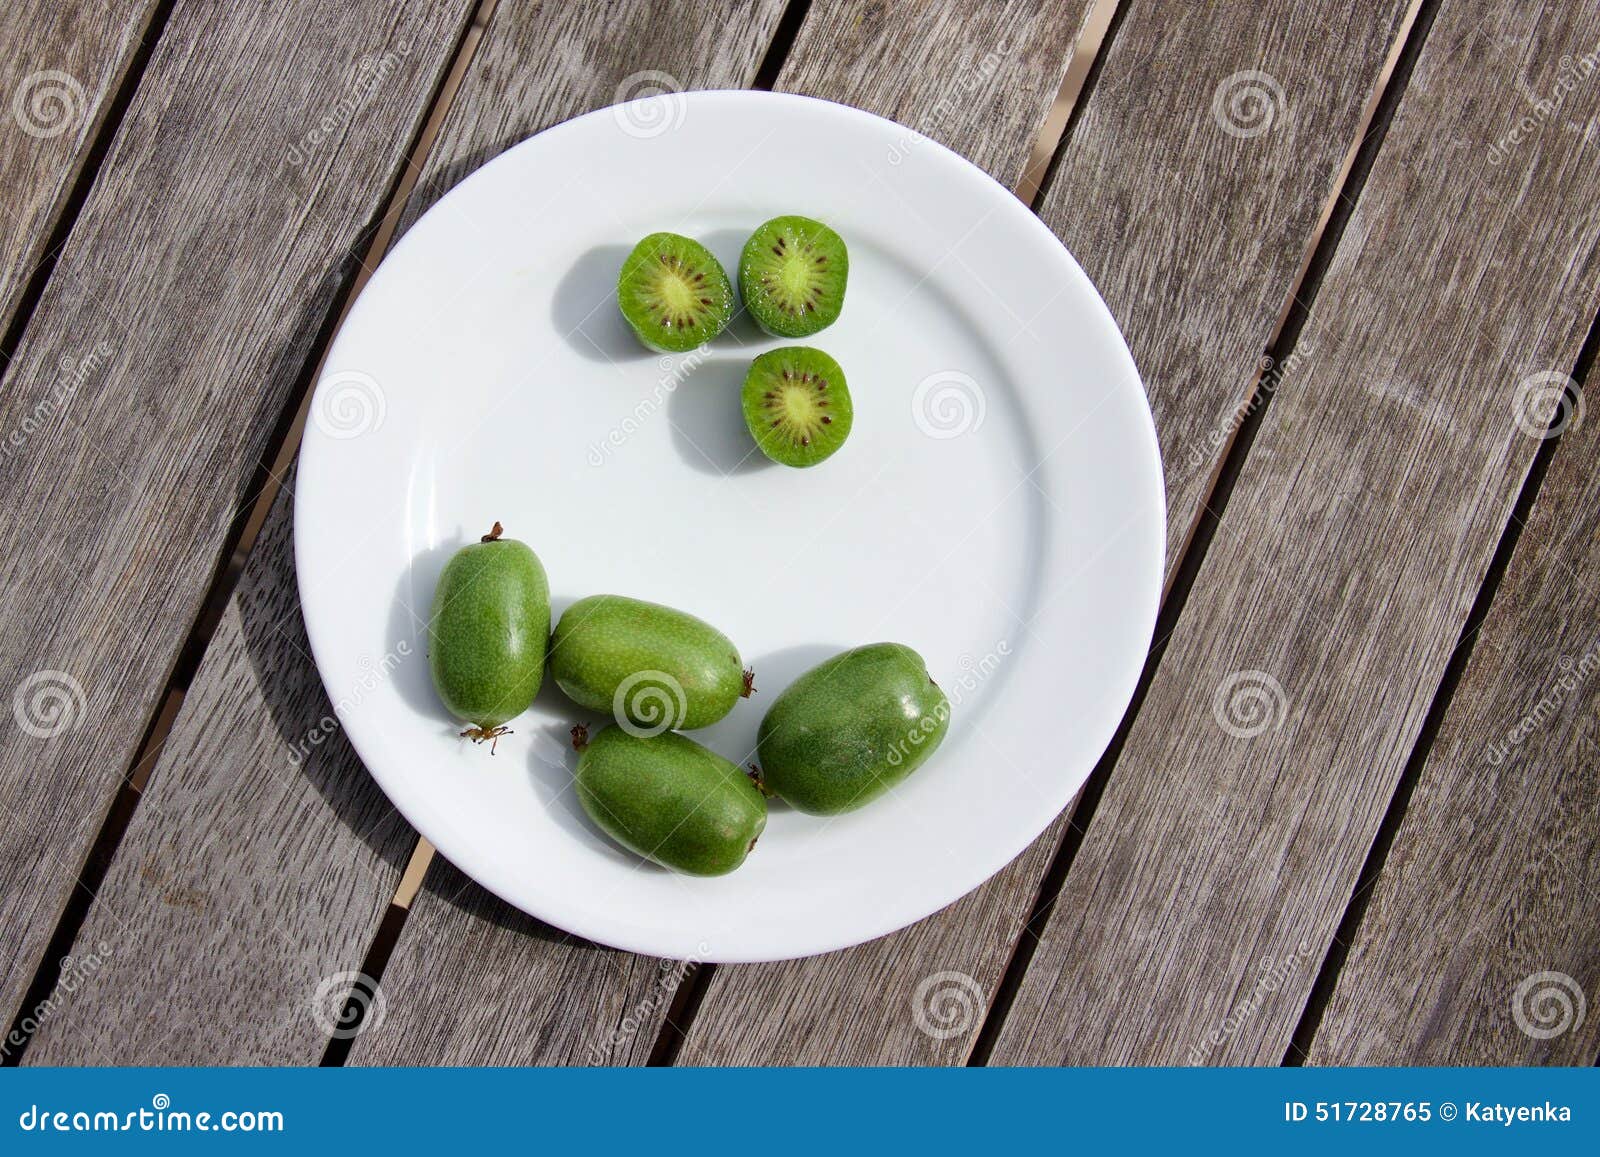 kiwi berries (arctic kiwifruit) on white plate on wooden table